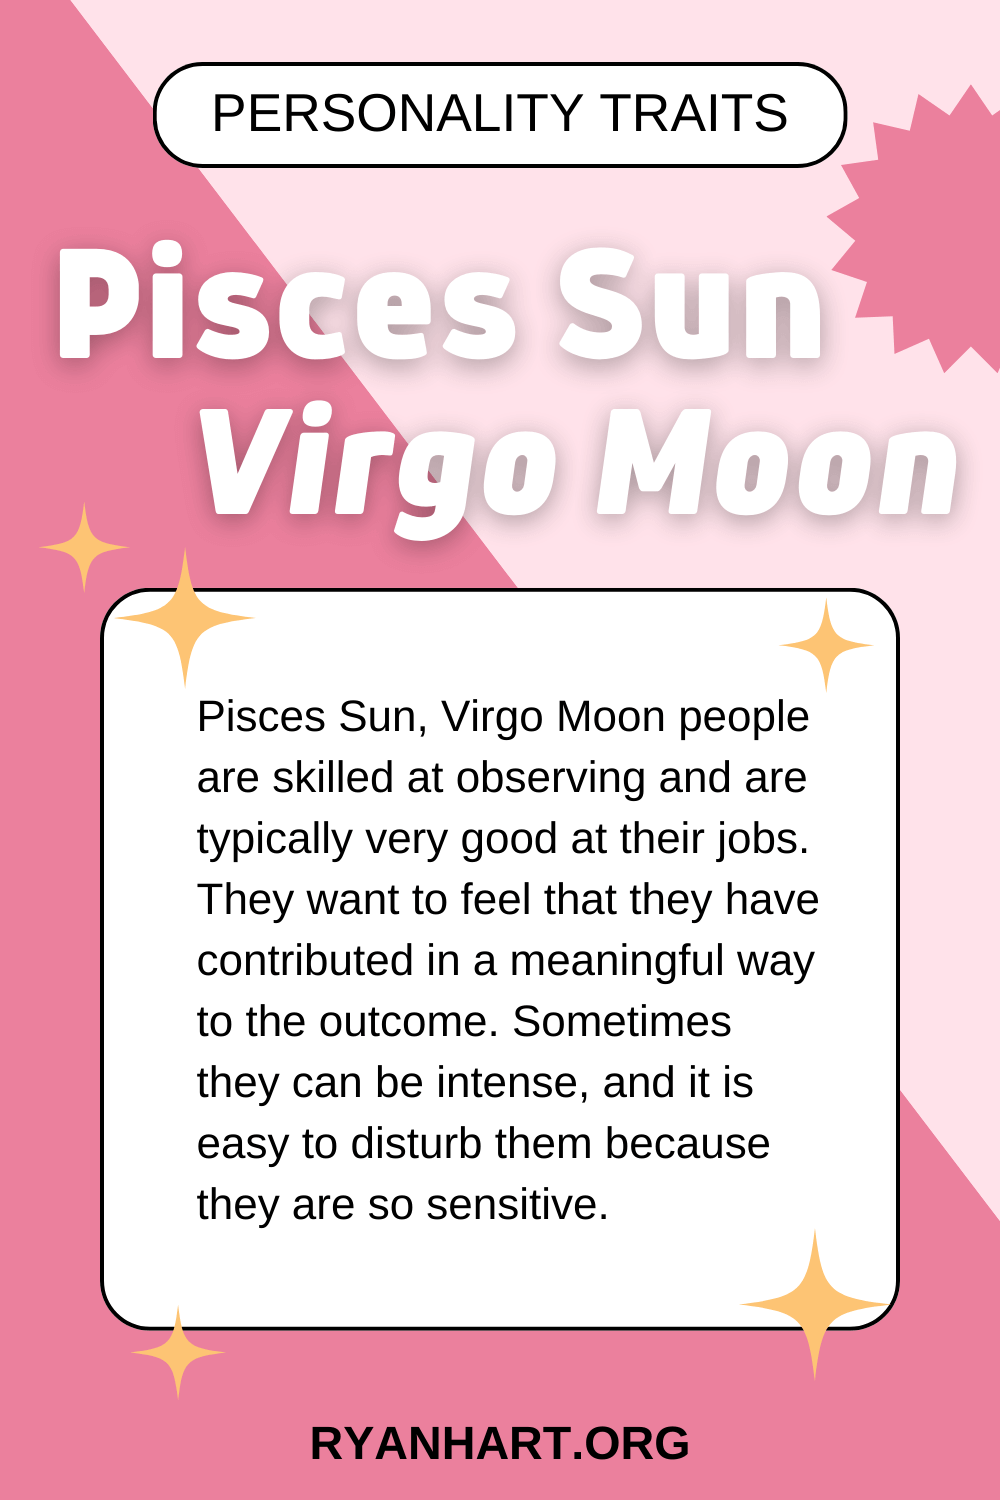 Pisces Sun Virgo Moon Description